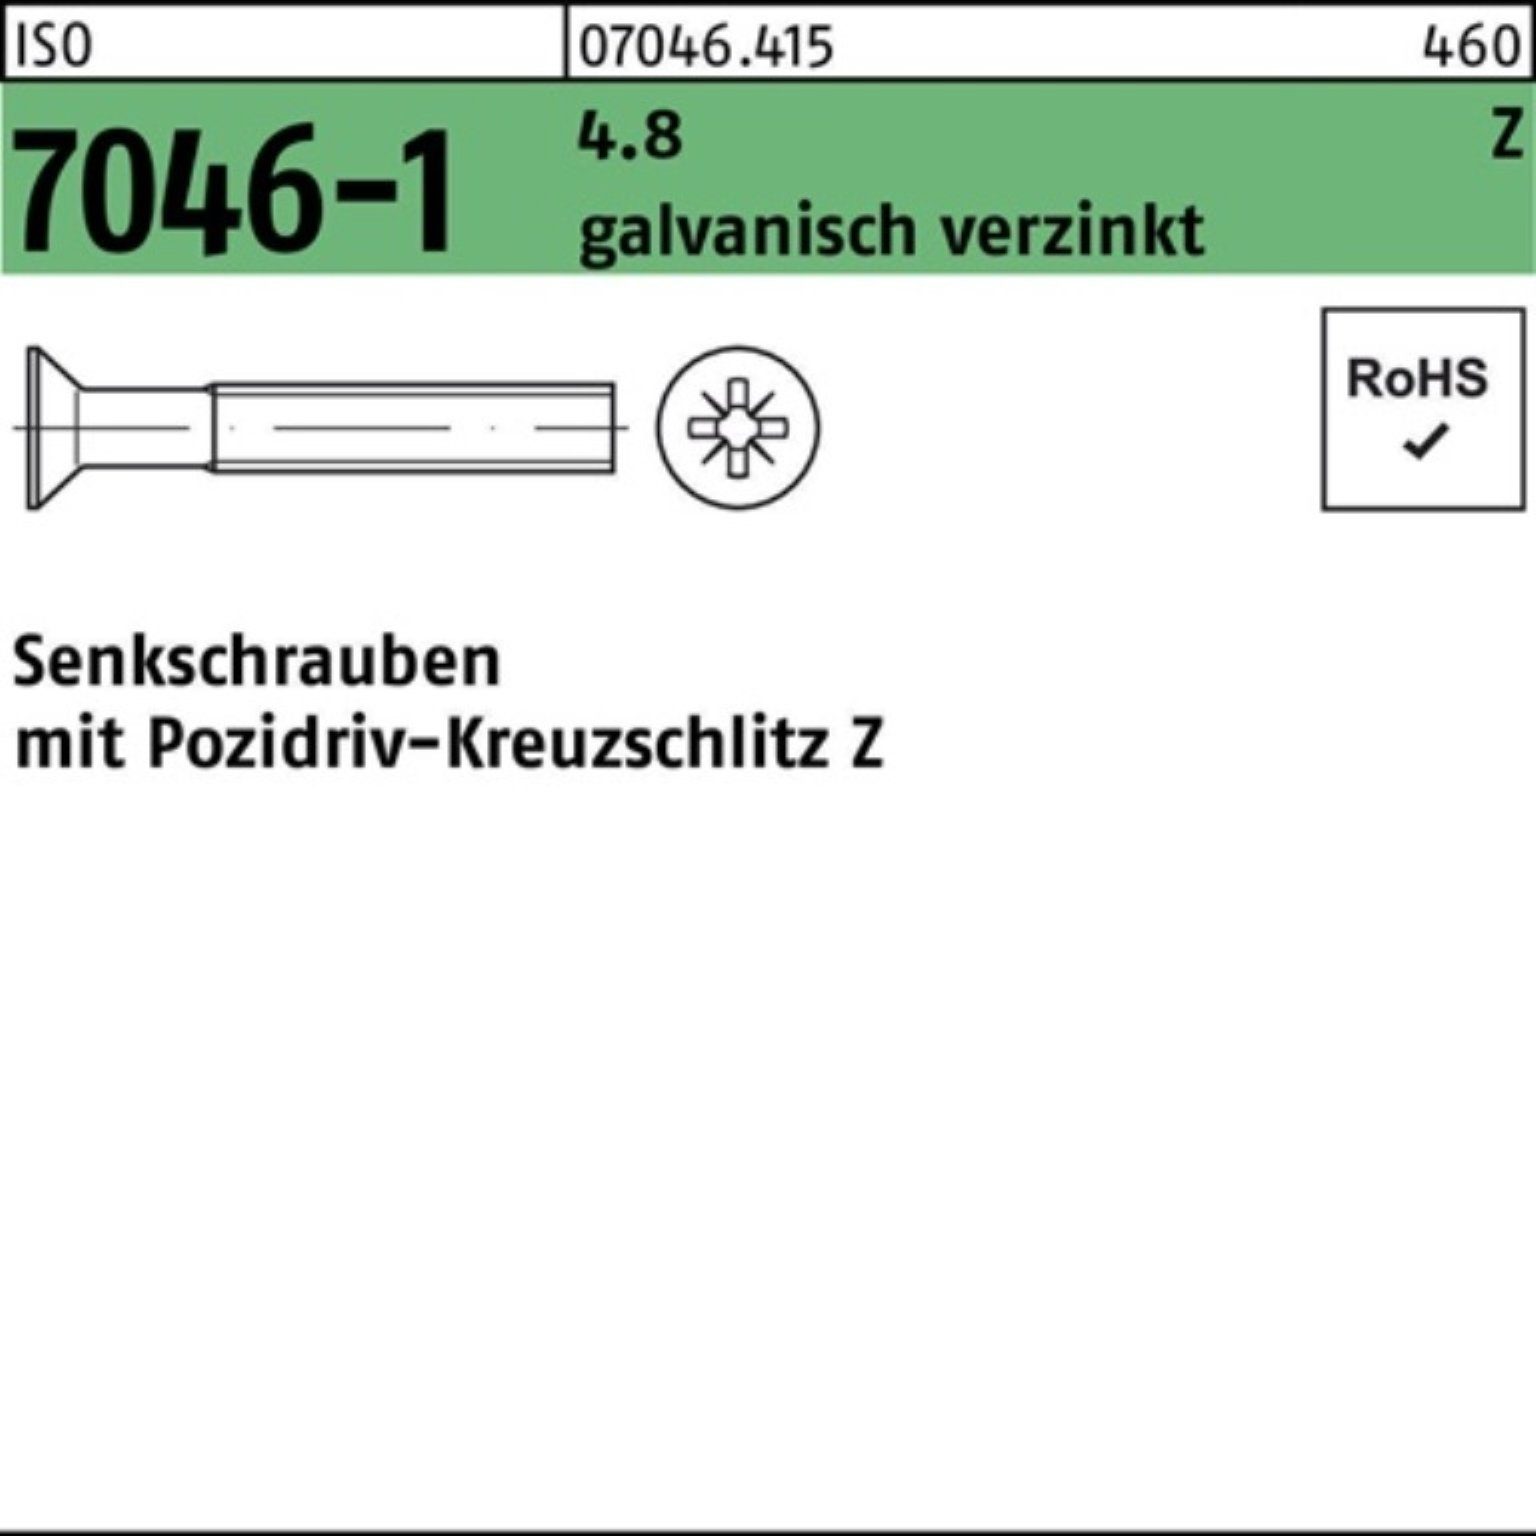 M3x5-Z PZ 2000er Pack 4.8 galv.verz. 2000St. ISO 7046-1 Reyher I Senkschraube Senkschraube